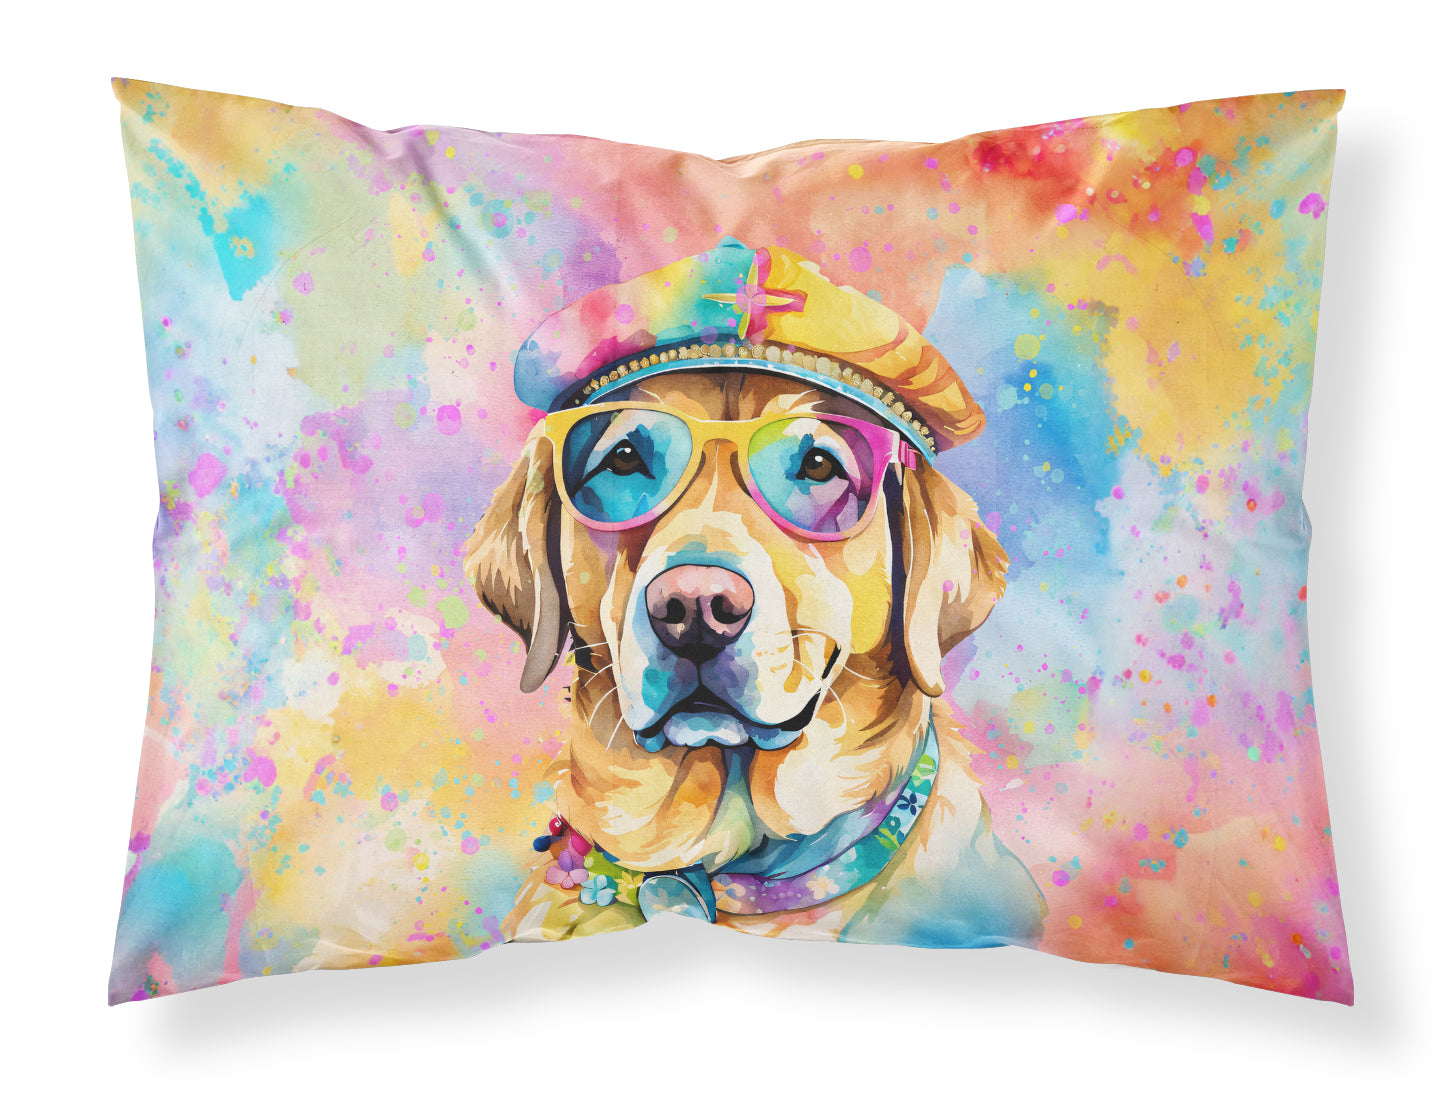 Buy this Yellow Labrador Hippie Dawg Standard Pillowcase